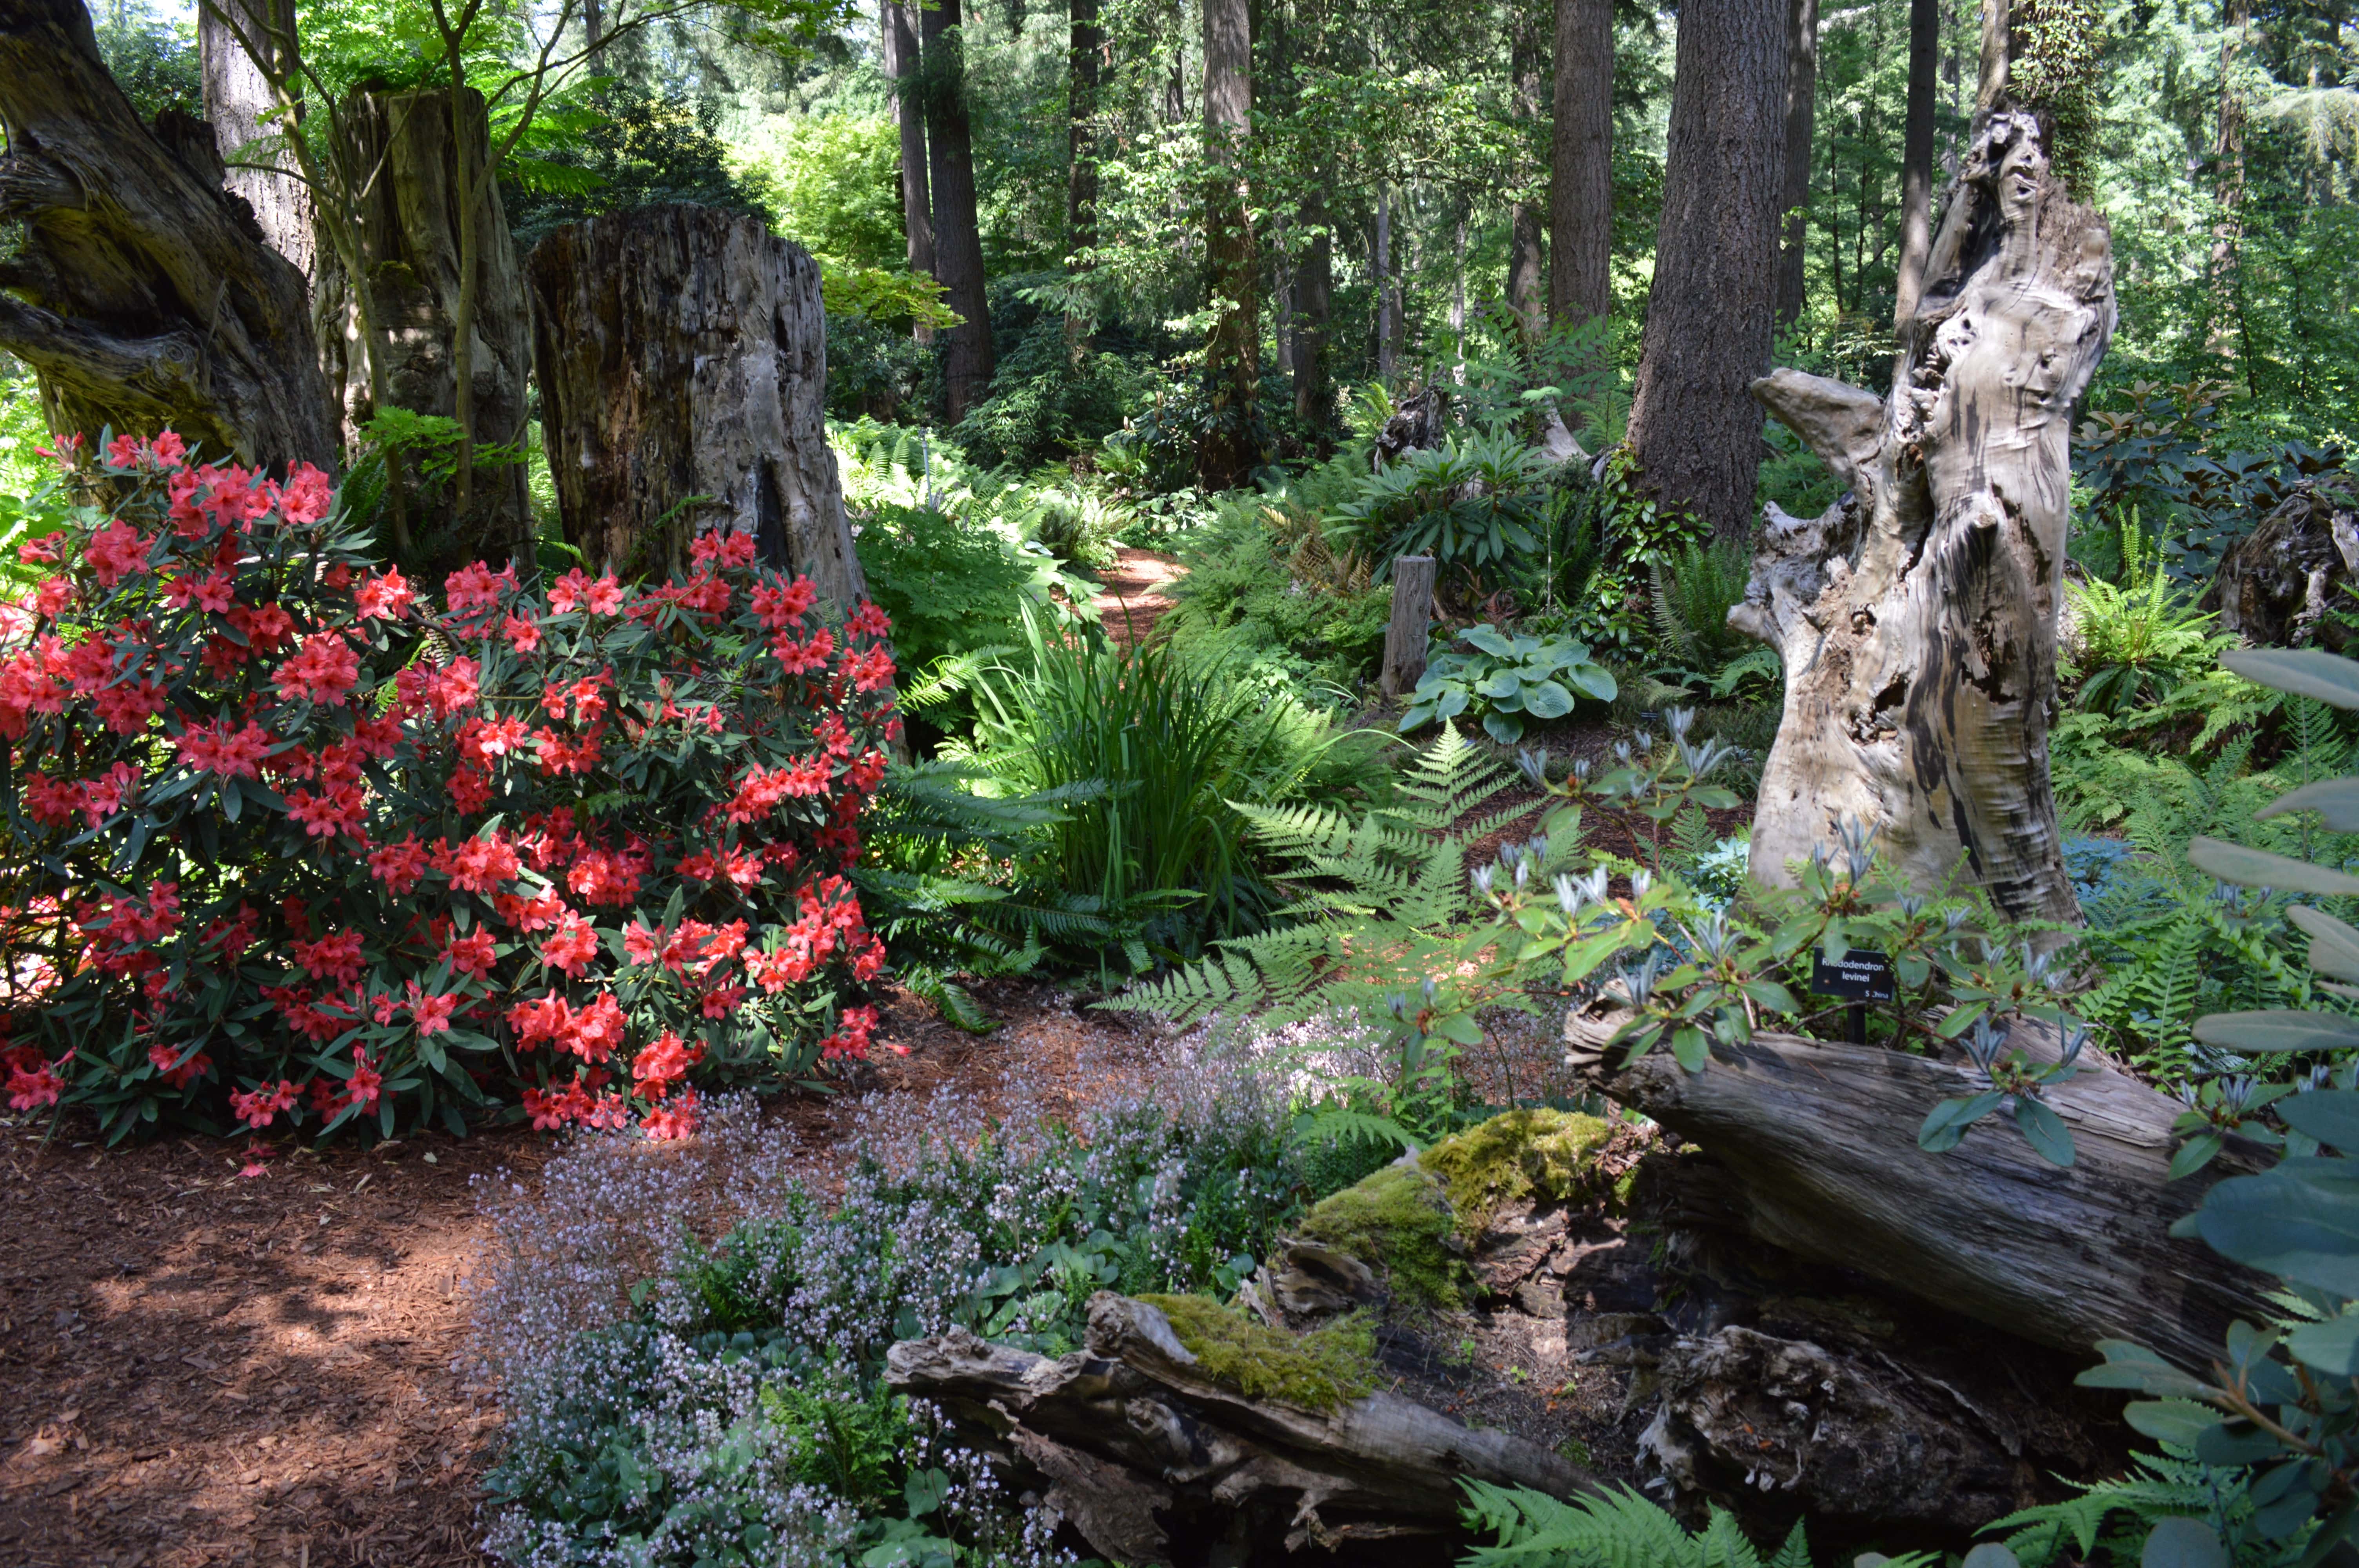 The Victorian Stumpery – Rhododendron Species Botanical Garden